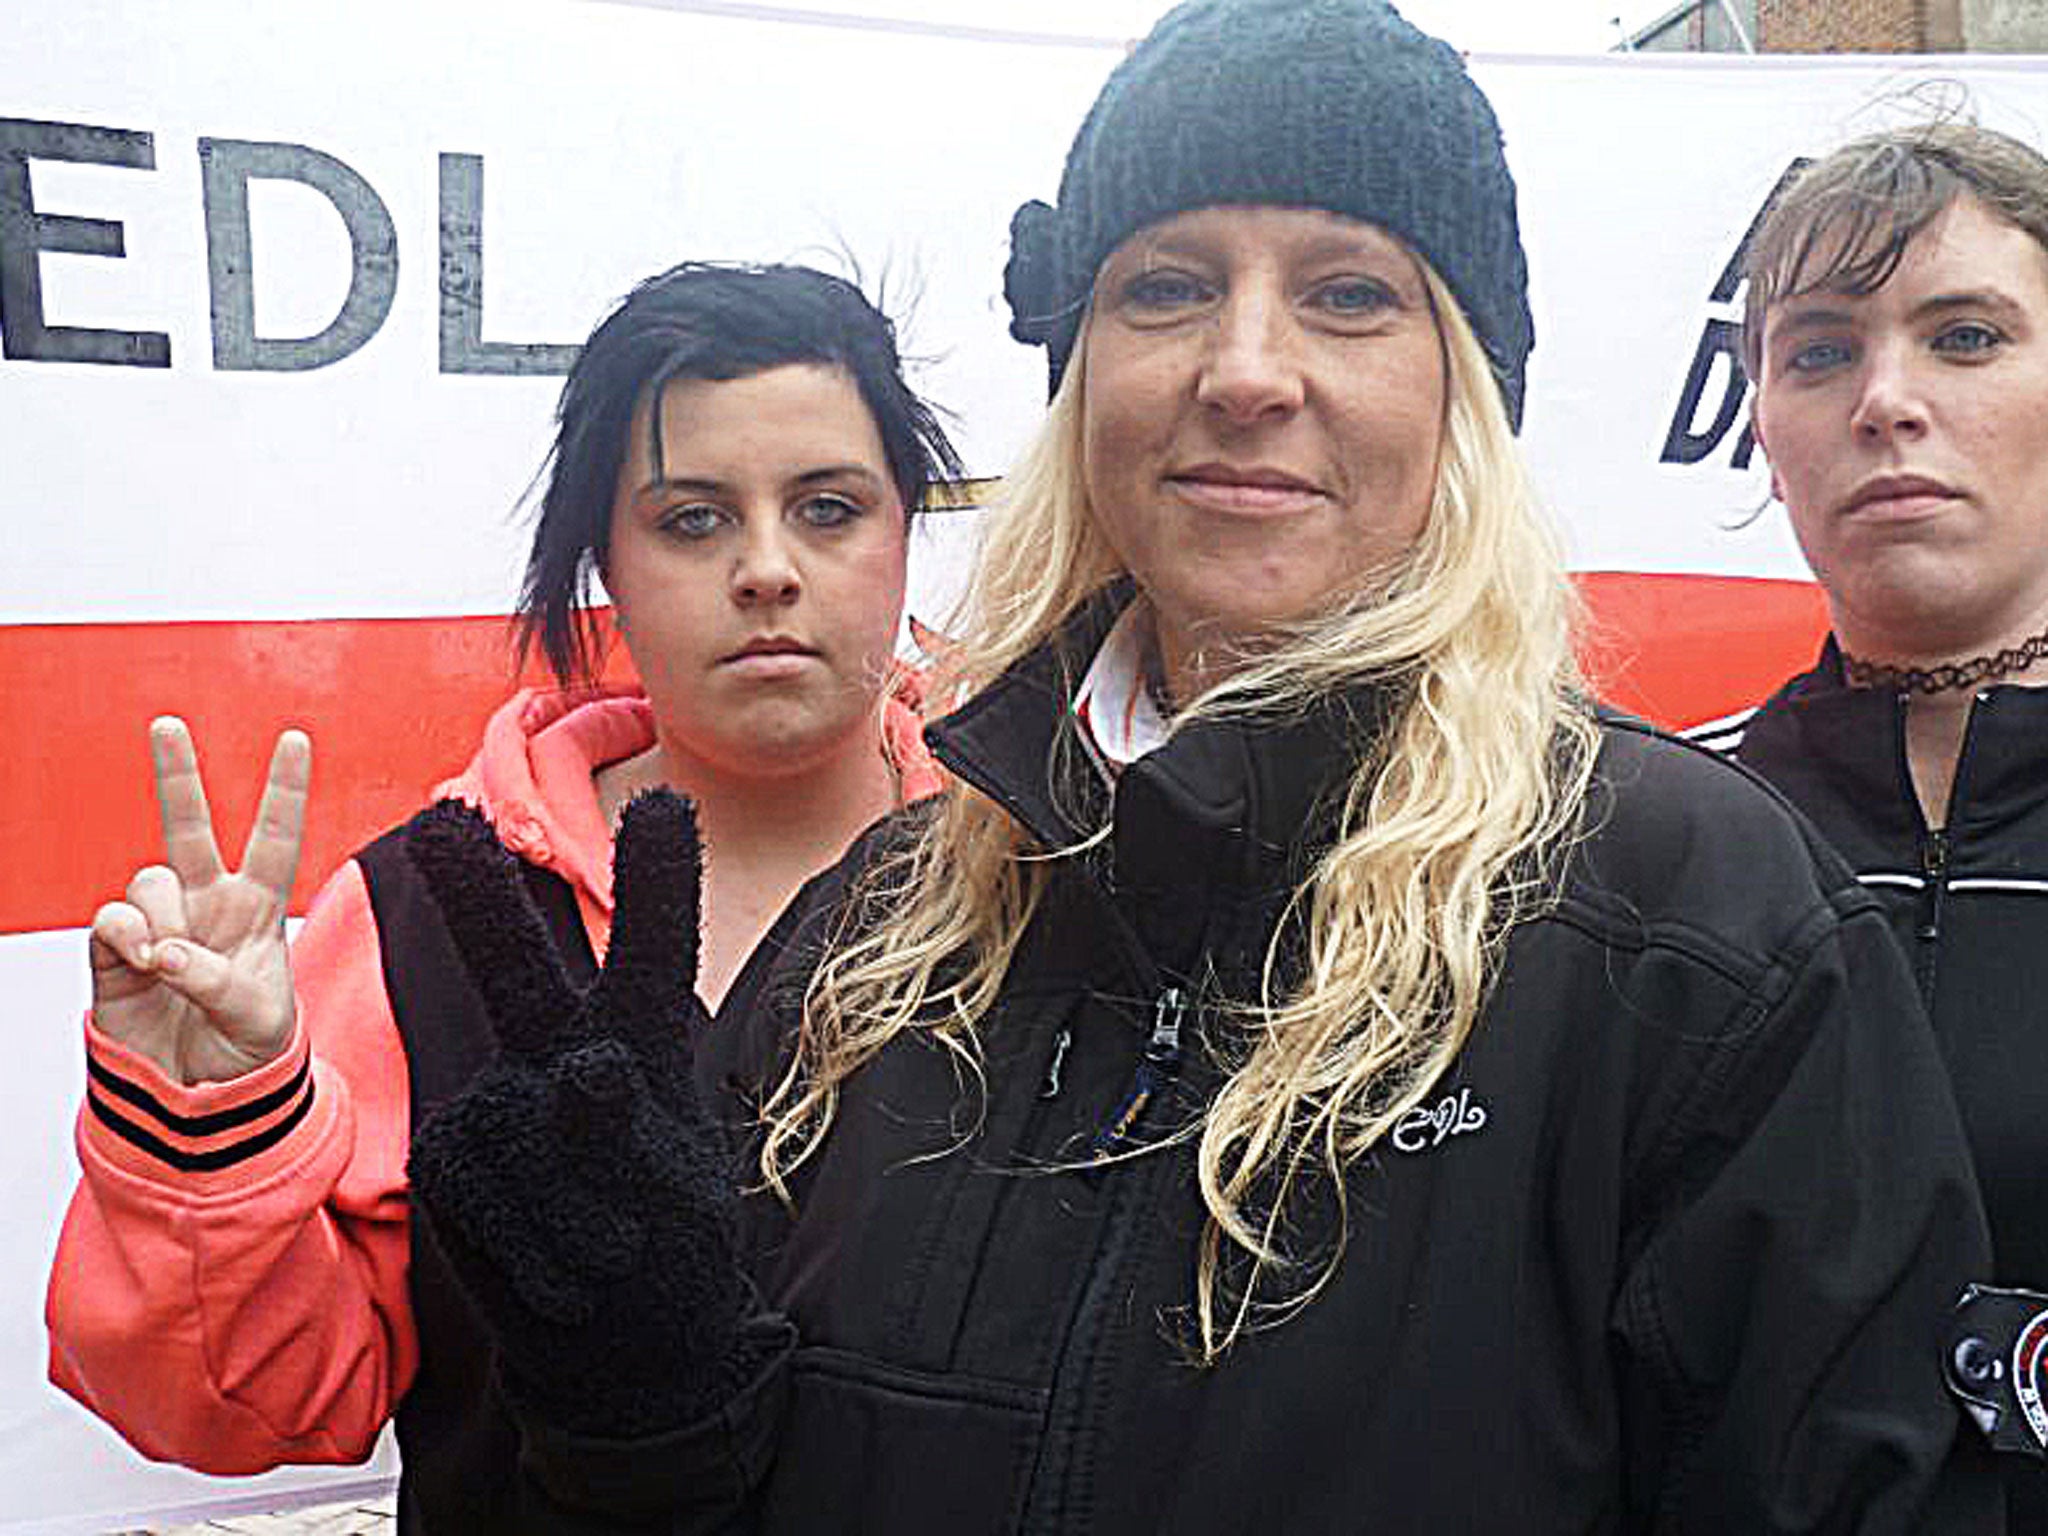 Patriot games: Amanda, Gail and Antonia in 'EDL Girls: Don’t Call Me Racist'